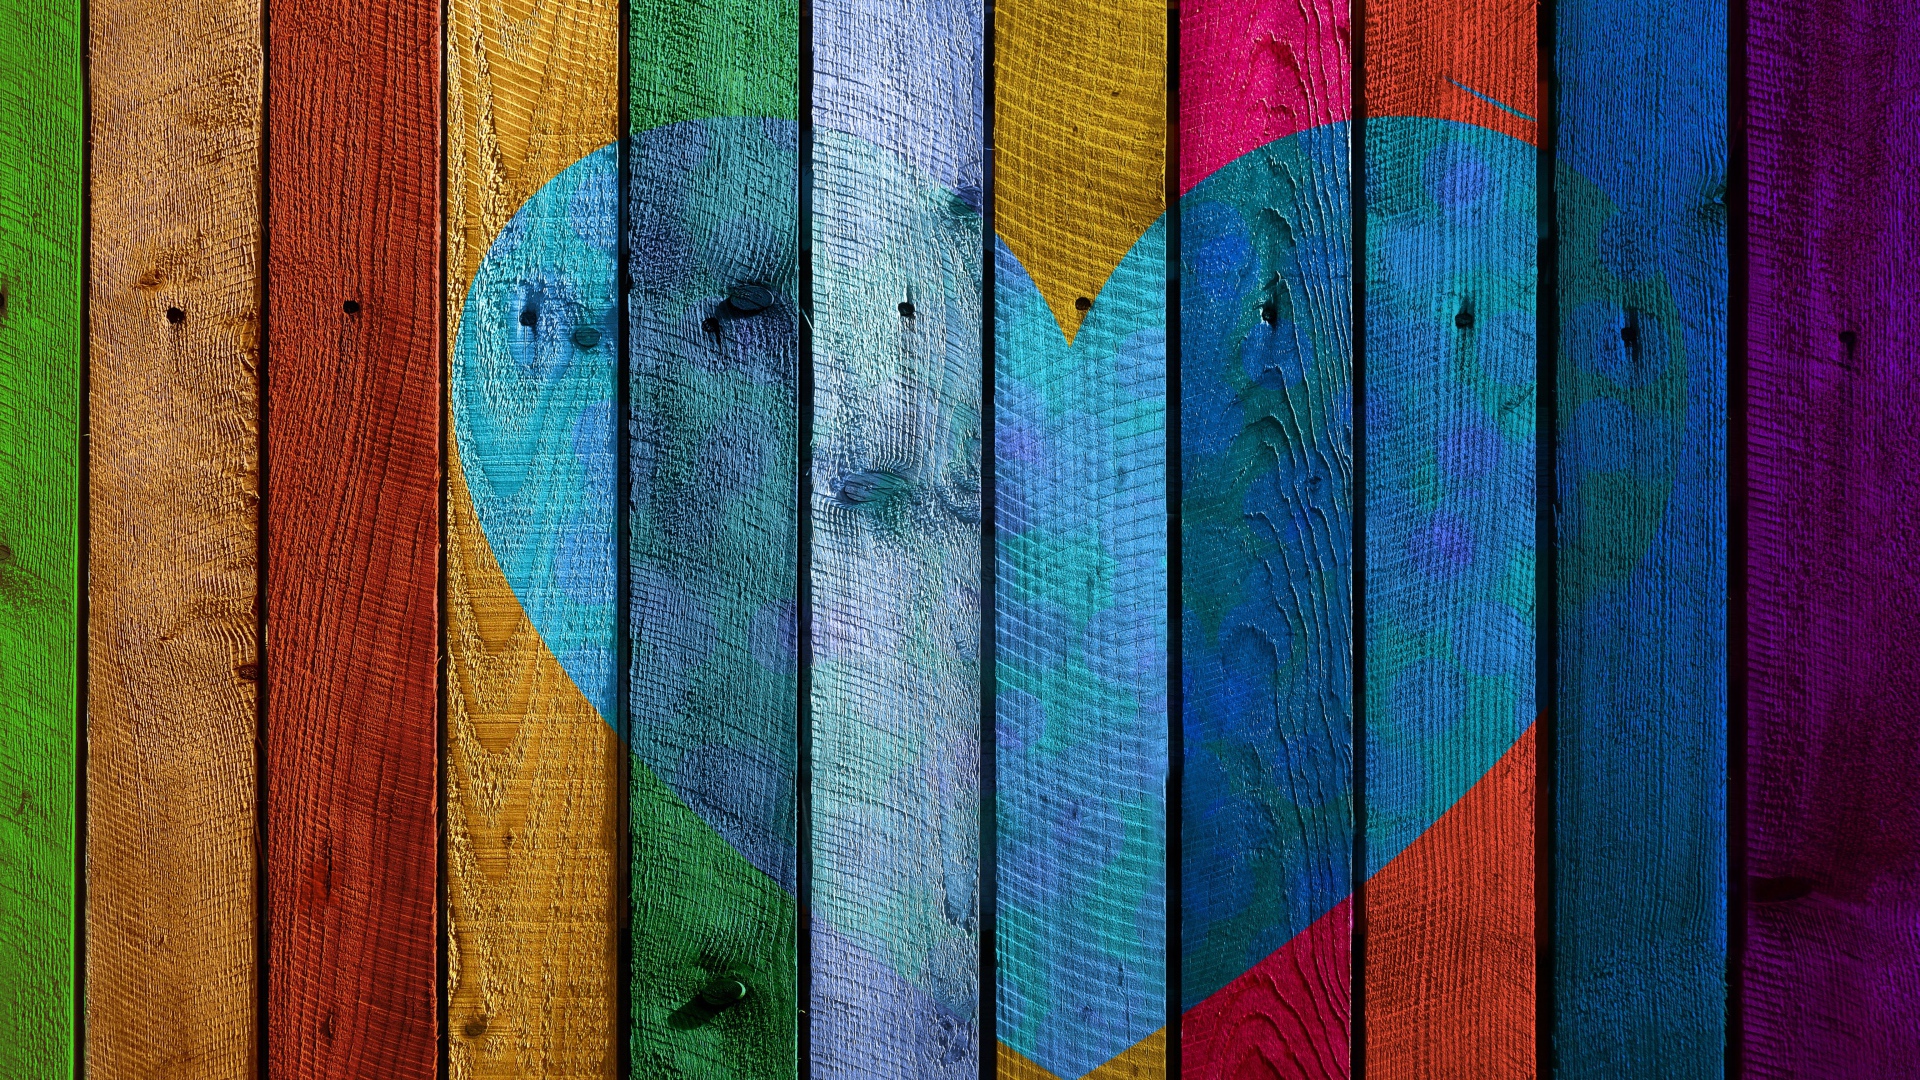 Синее сердце на разноцветном заборе 